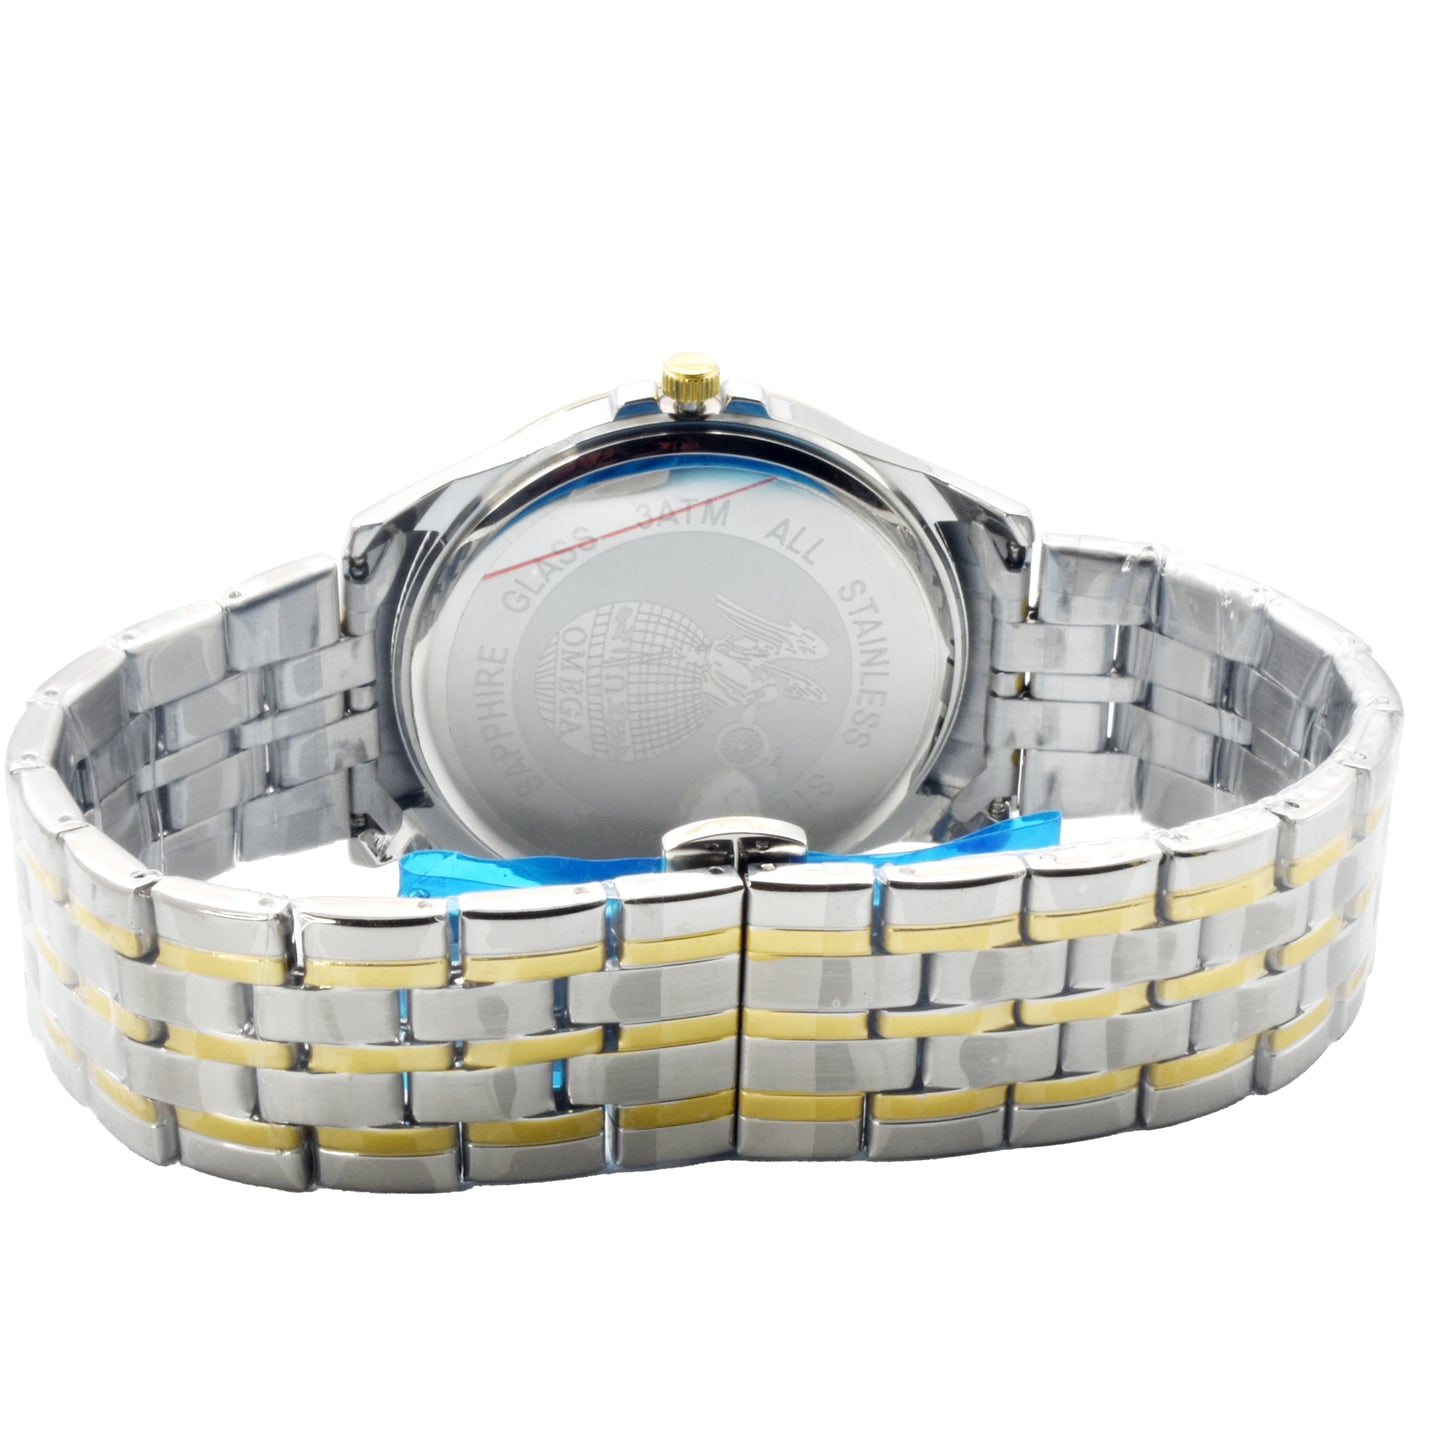 Premium Quality Quartz Watch | OMGA Watch 1020 A